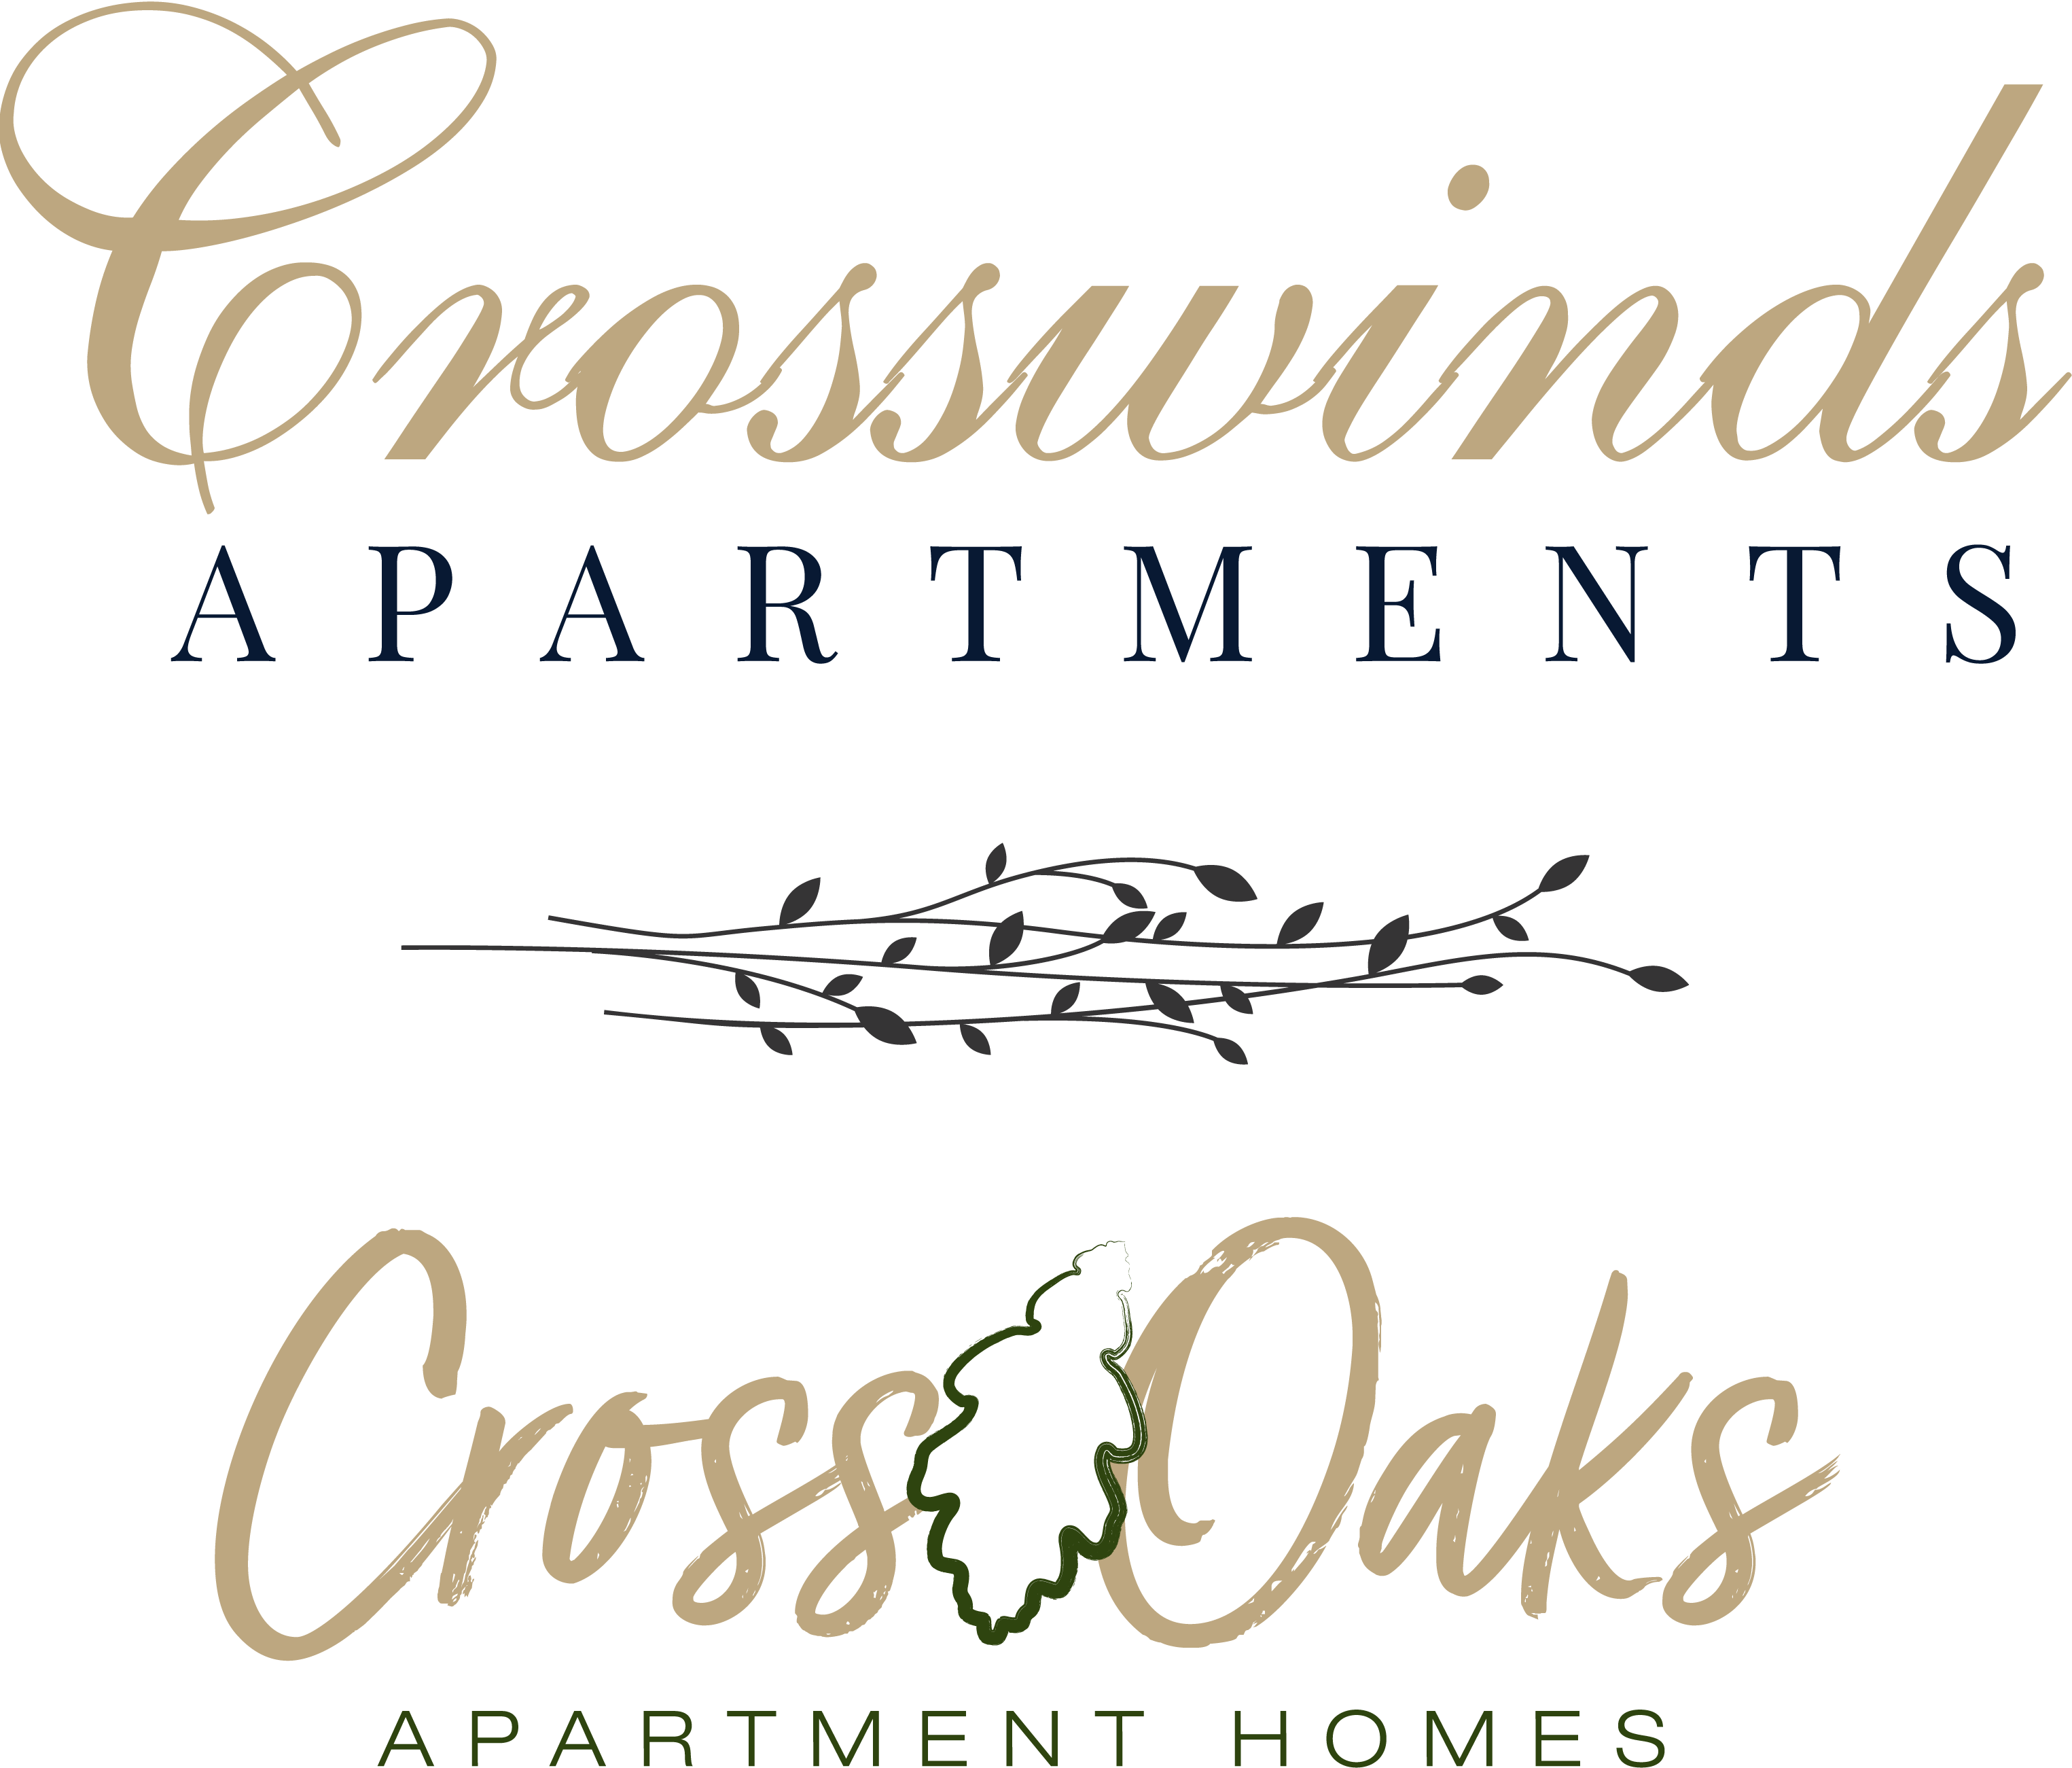 Cross Oaks Apartments